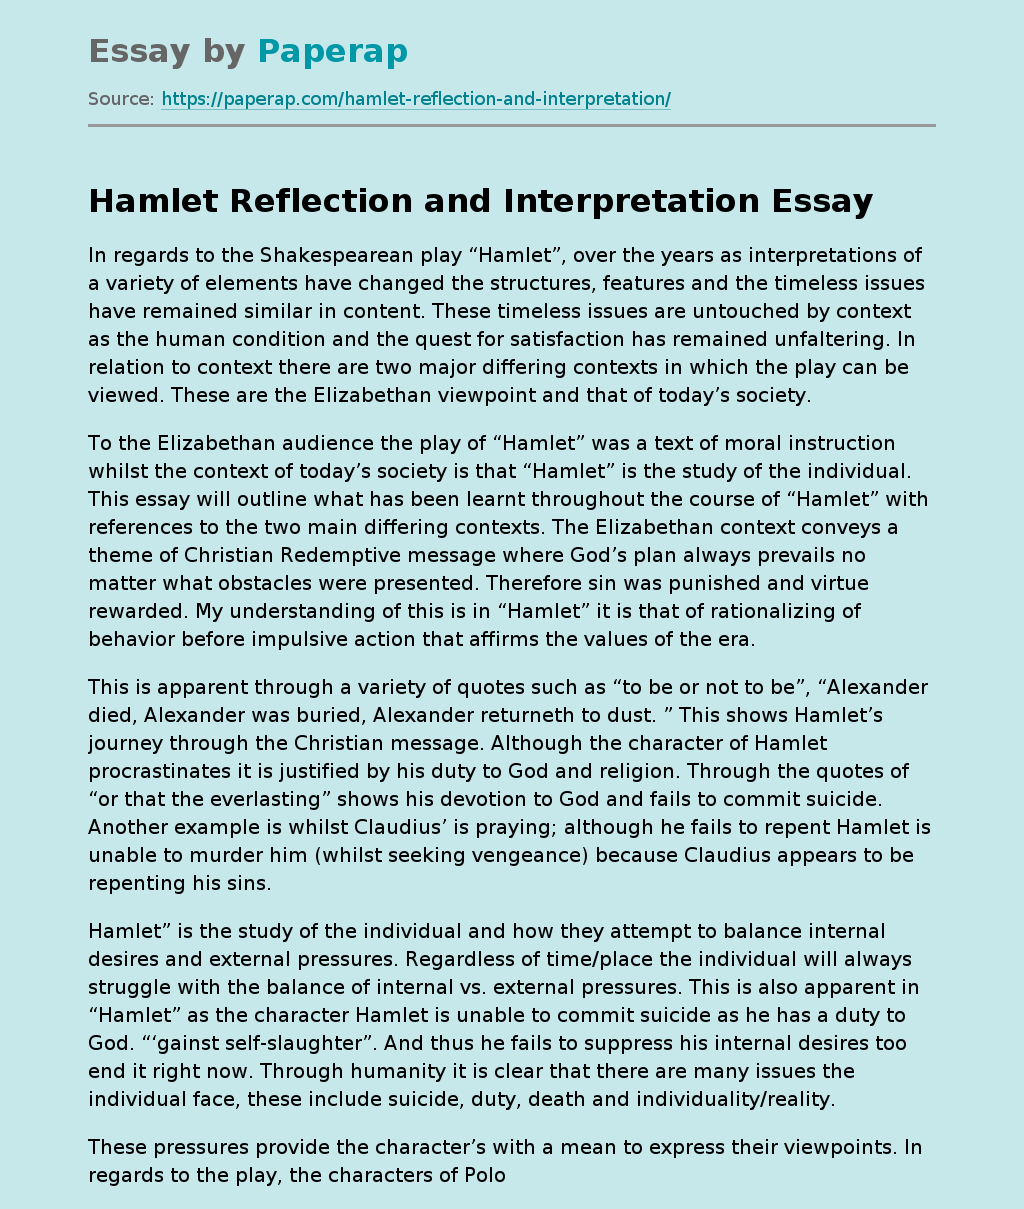 Hamlet Reflection and Interpretation